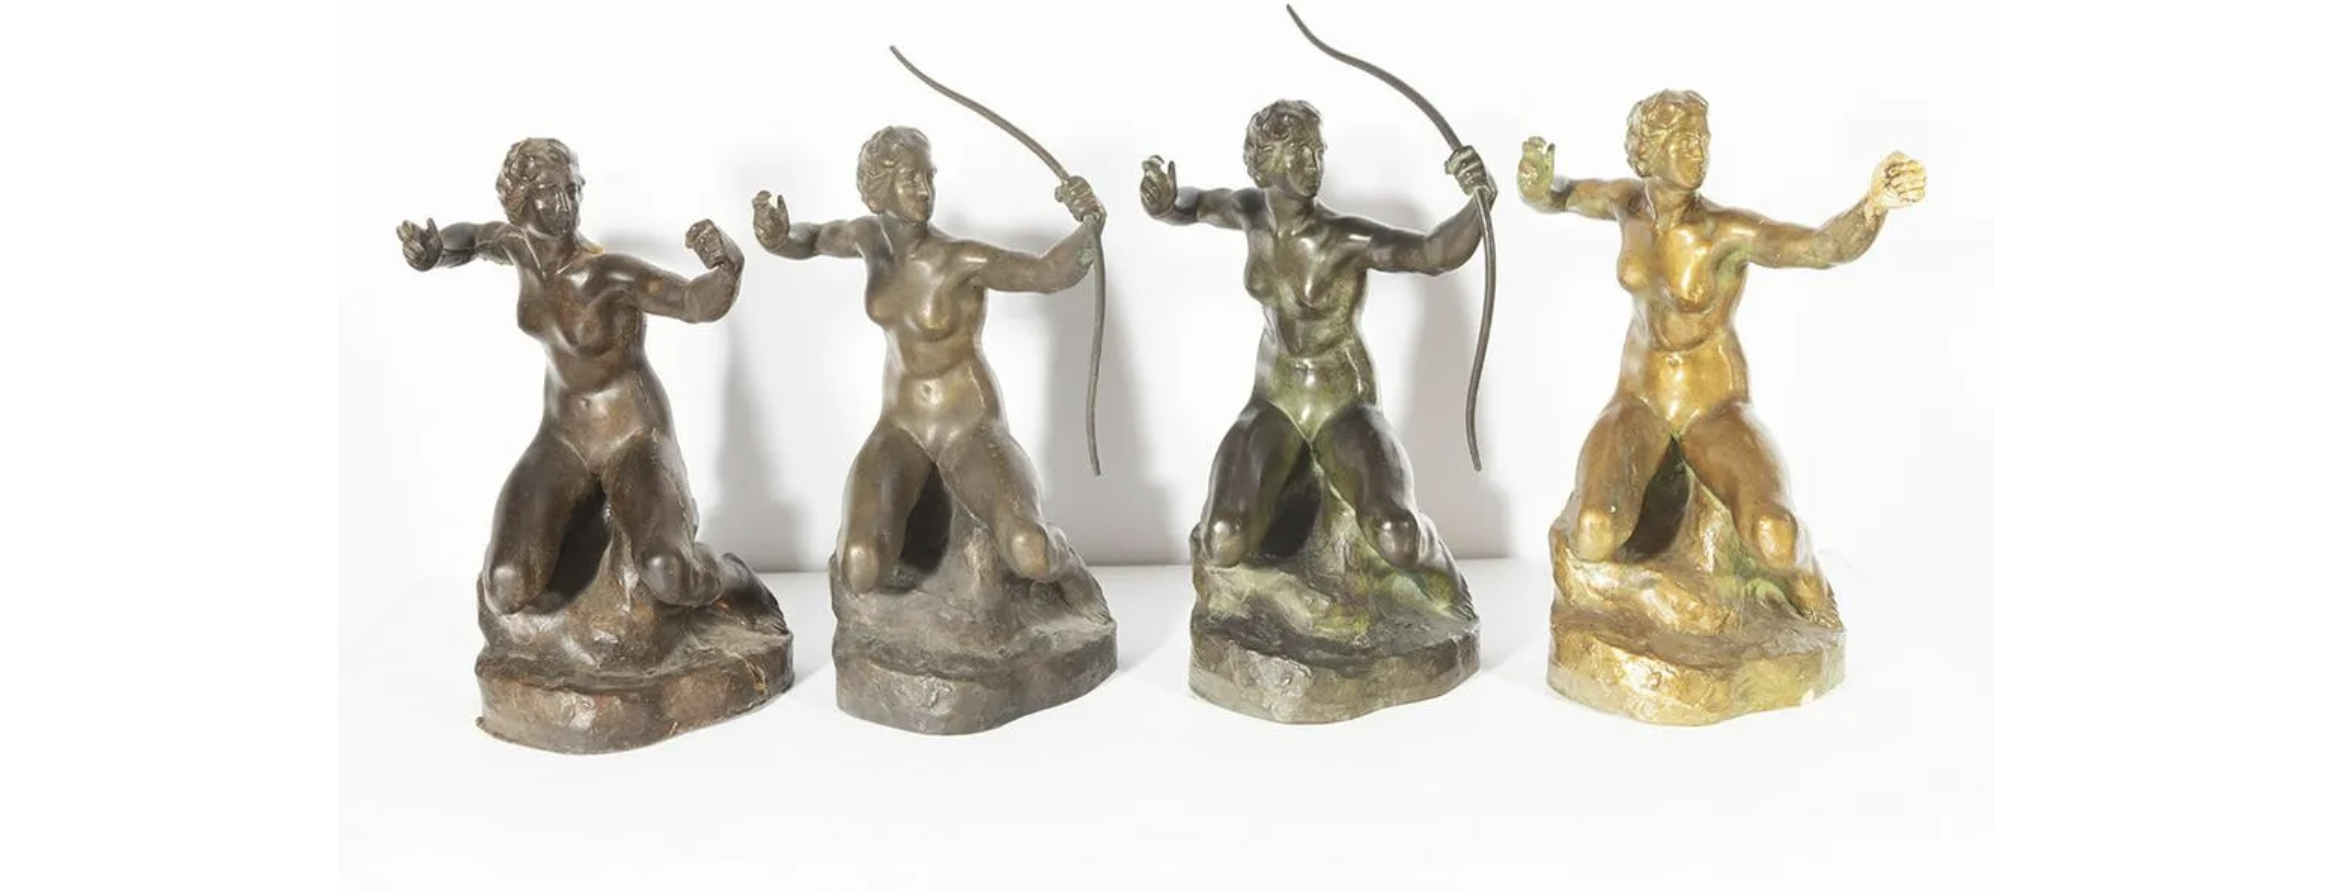 Foursome of Diana sculptures by Haig Patigian, est. $2,000-$4,000